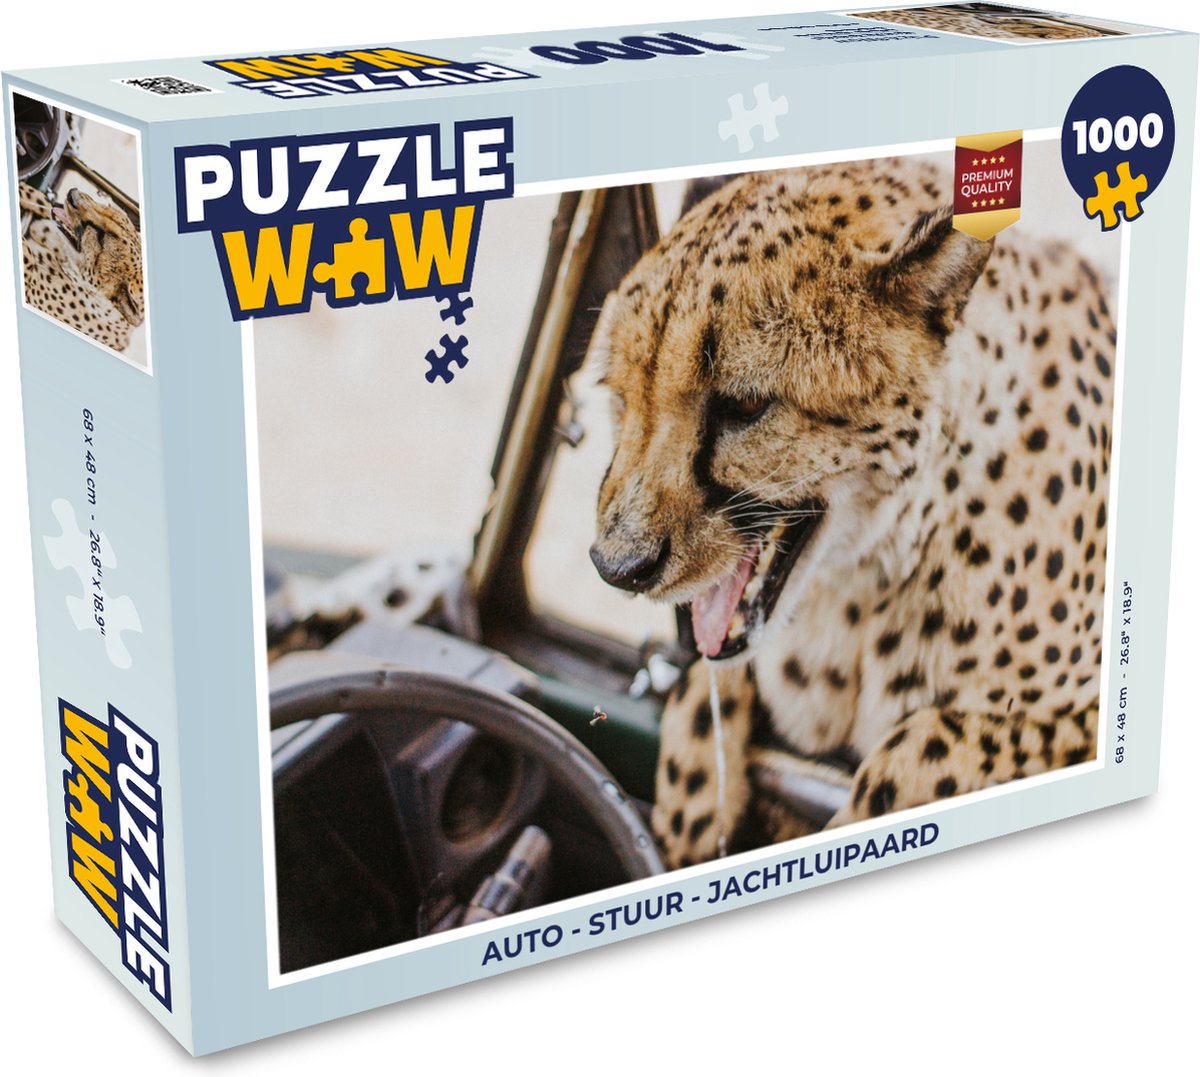 Puzzel Auto - Stuur - Jachtluipaard - Legpuzzel - Puzzel 1000 stukjes  volwassenen | bol.com